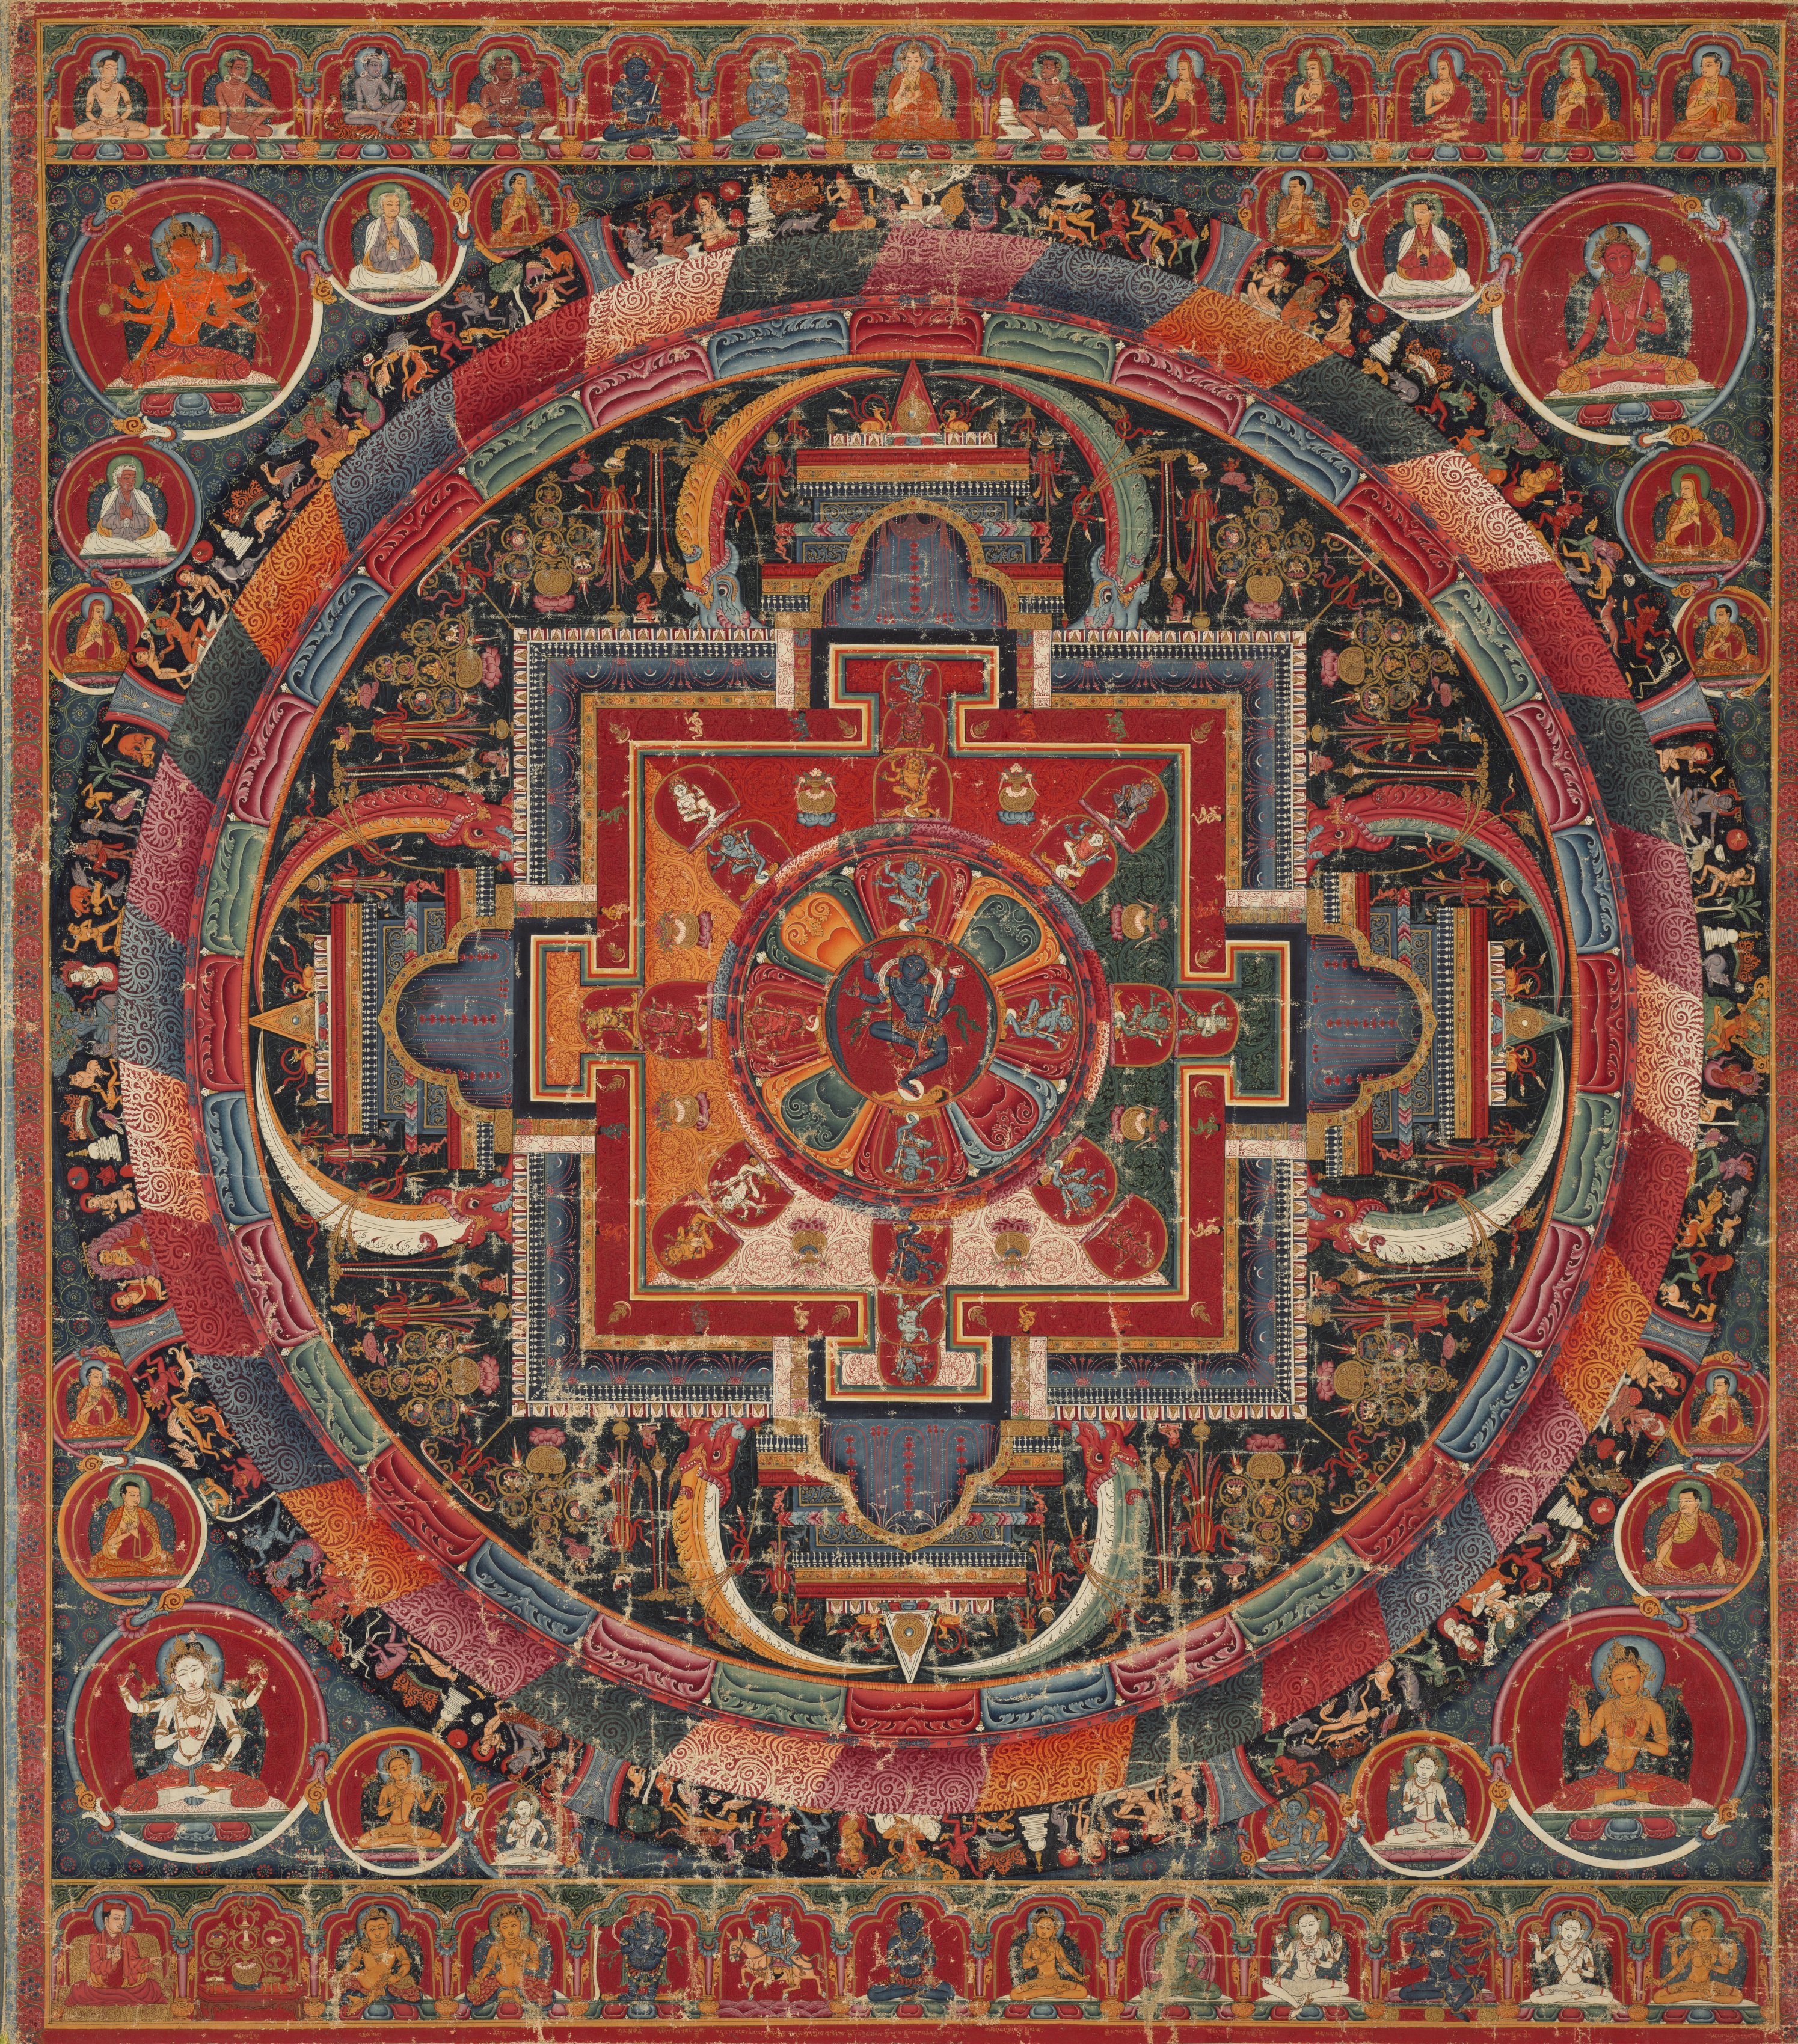 Twenty-three Deity Nairatma Mandala